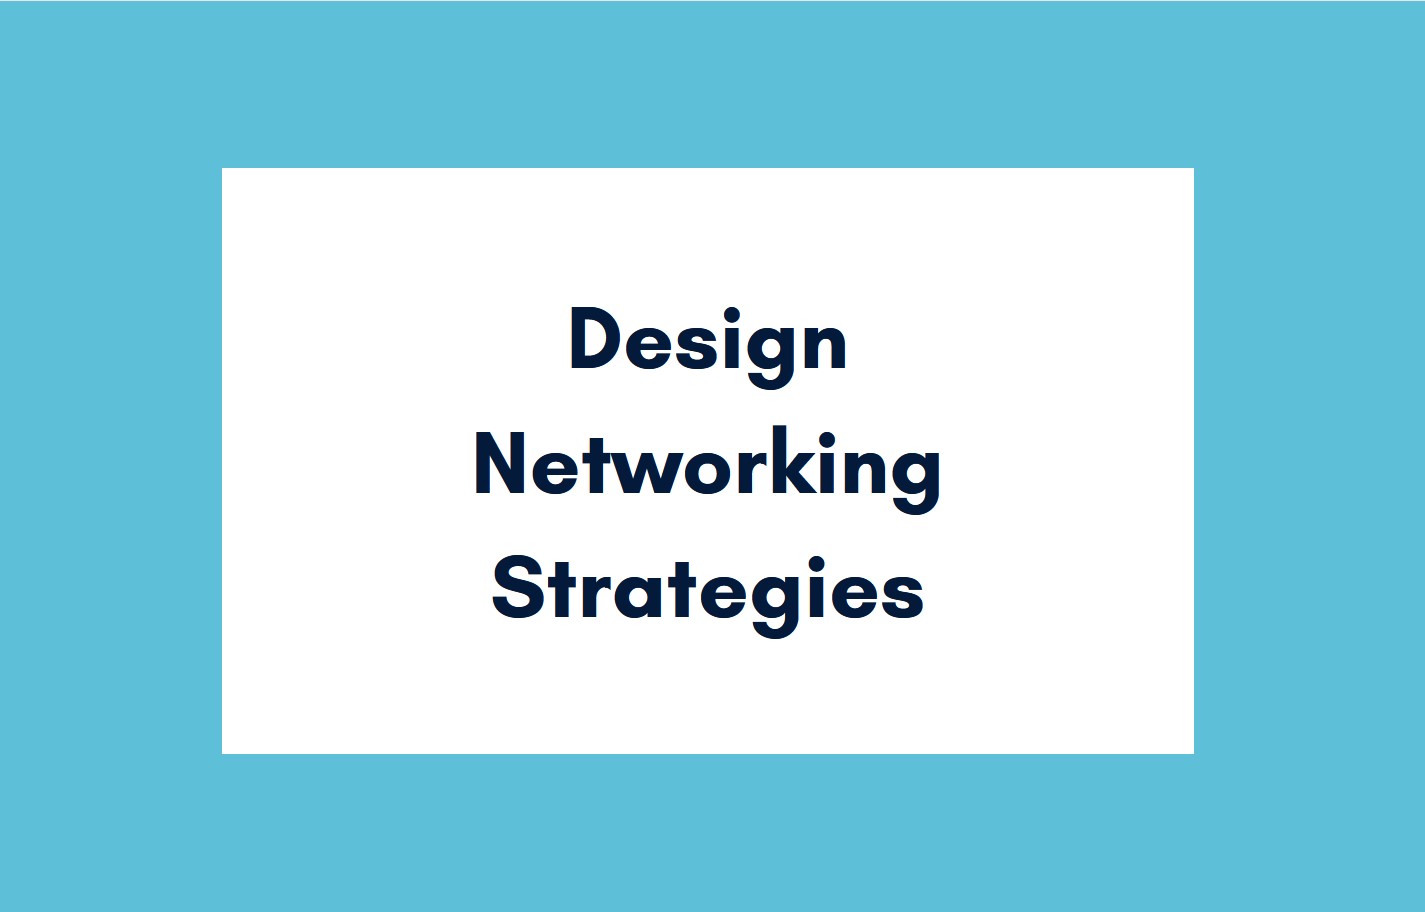 Design Networking Strategies